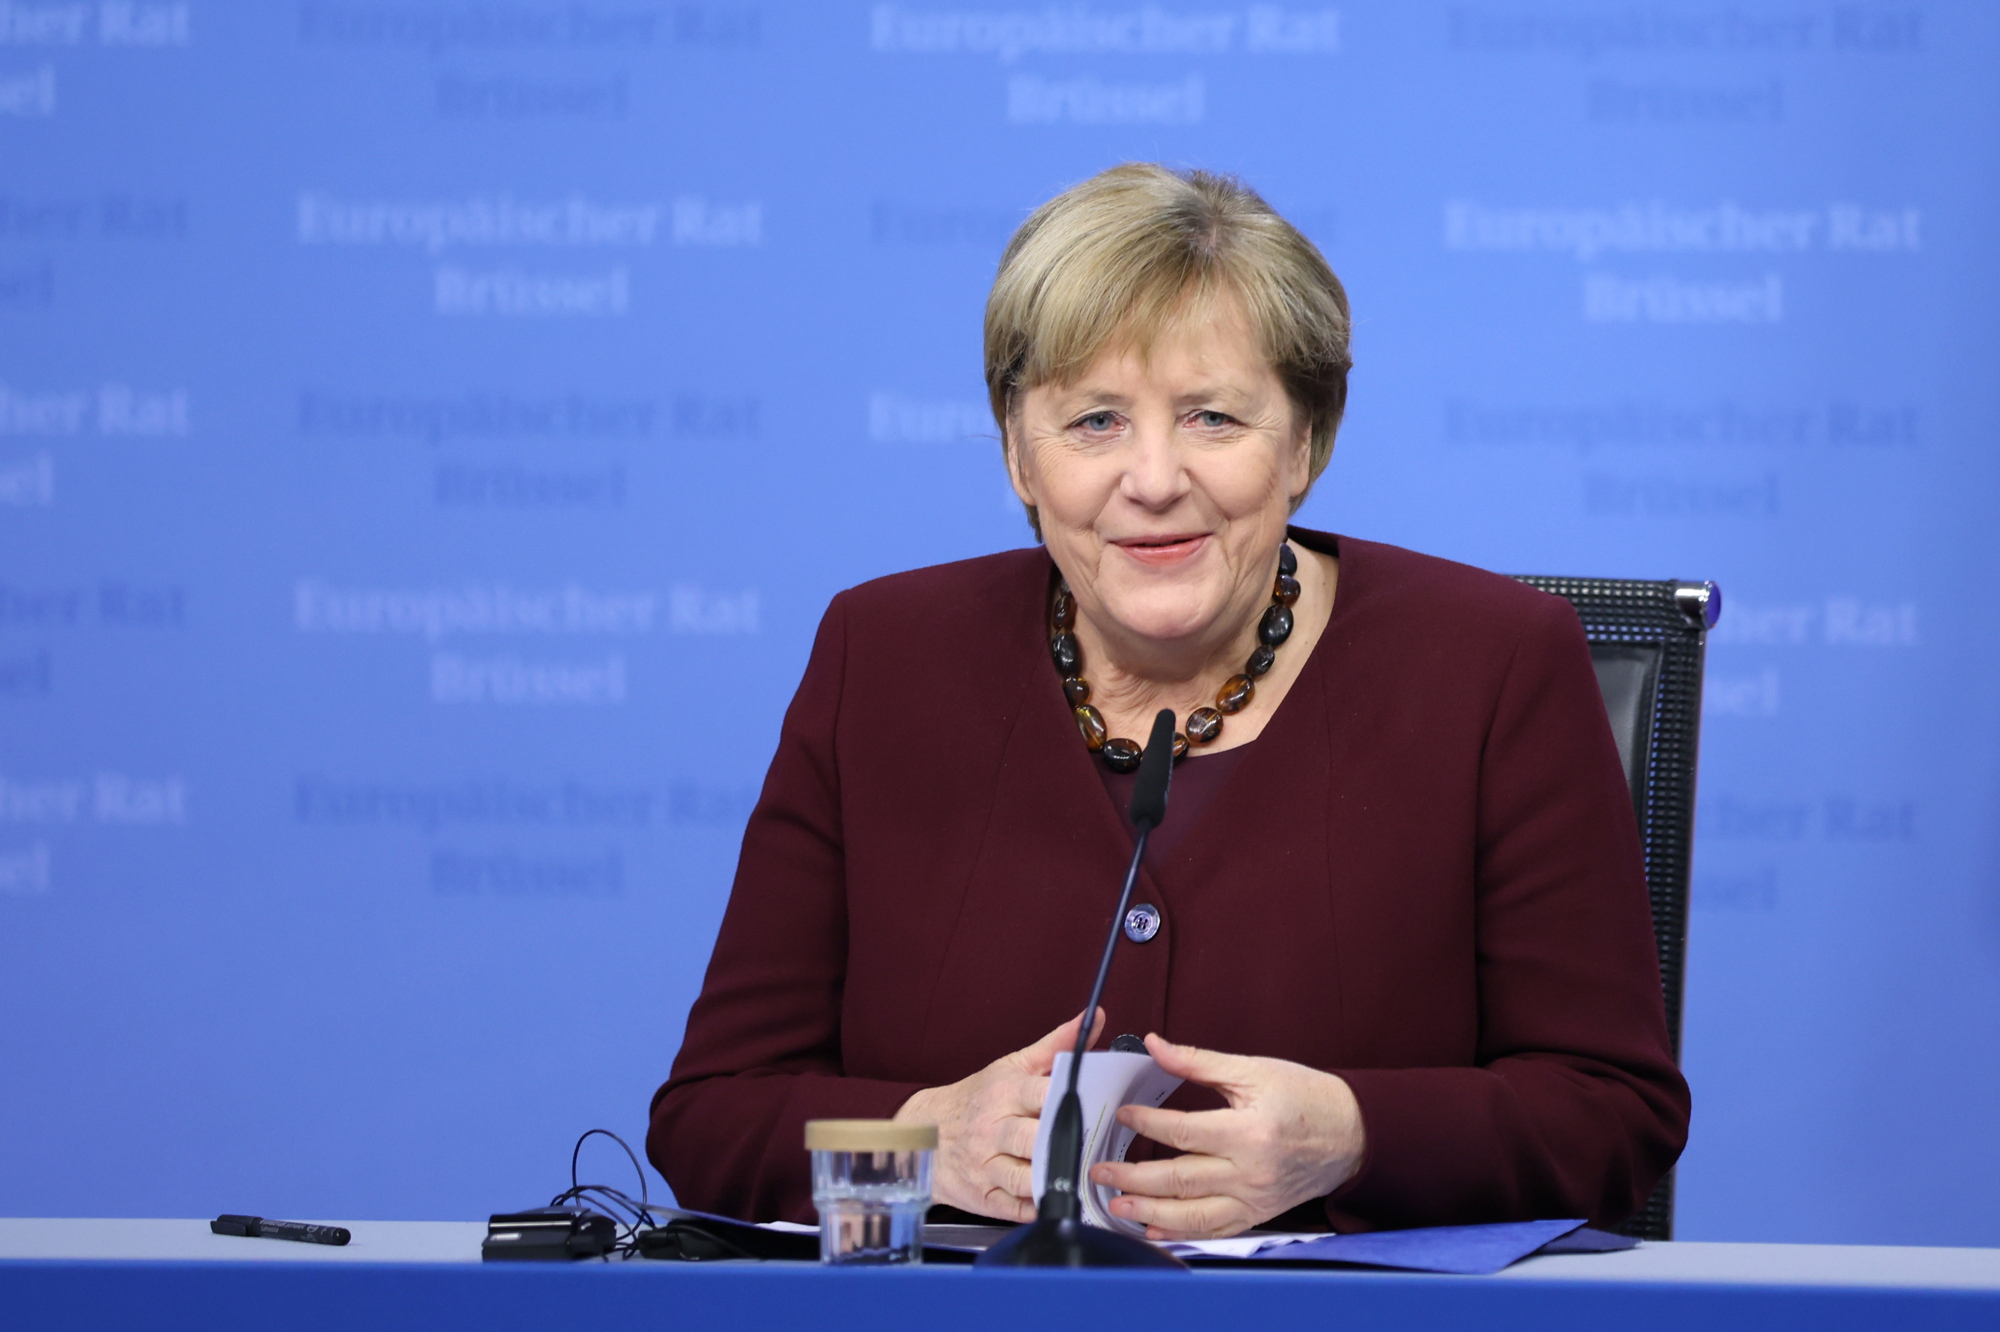 Retired Angela Merkel Turns Down UN Job